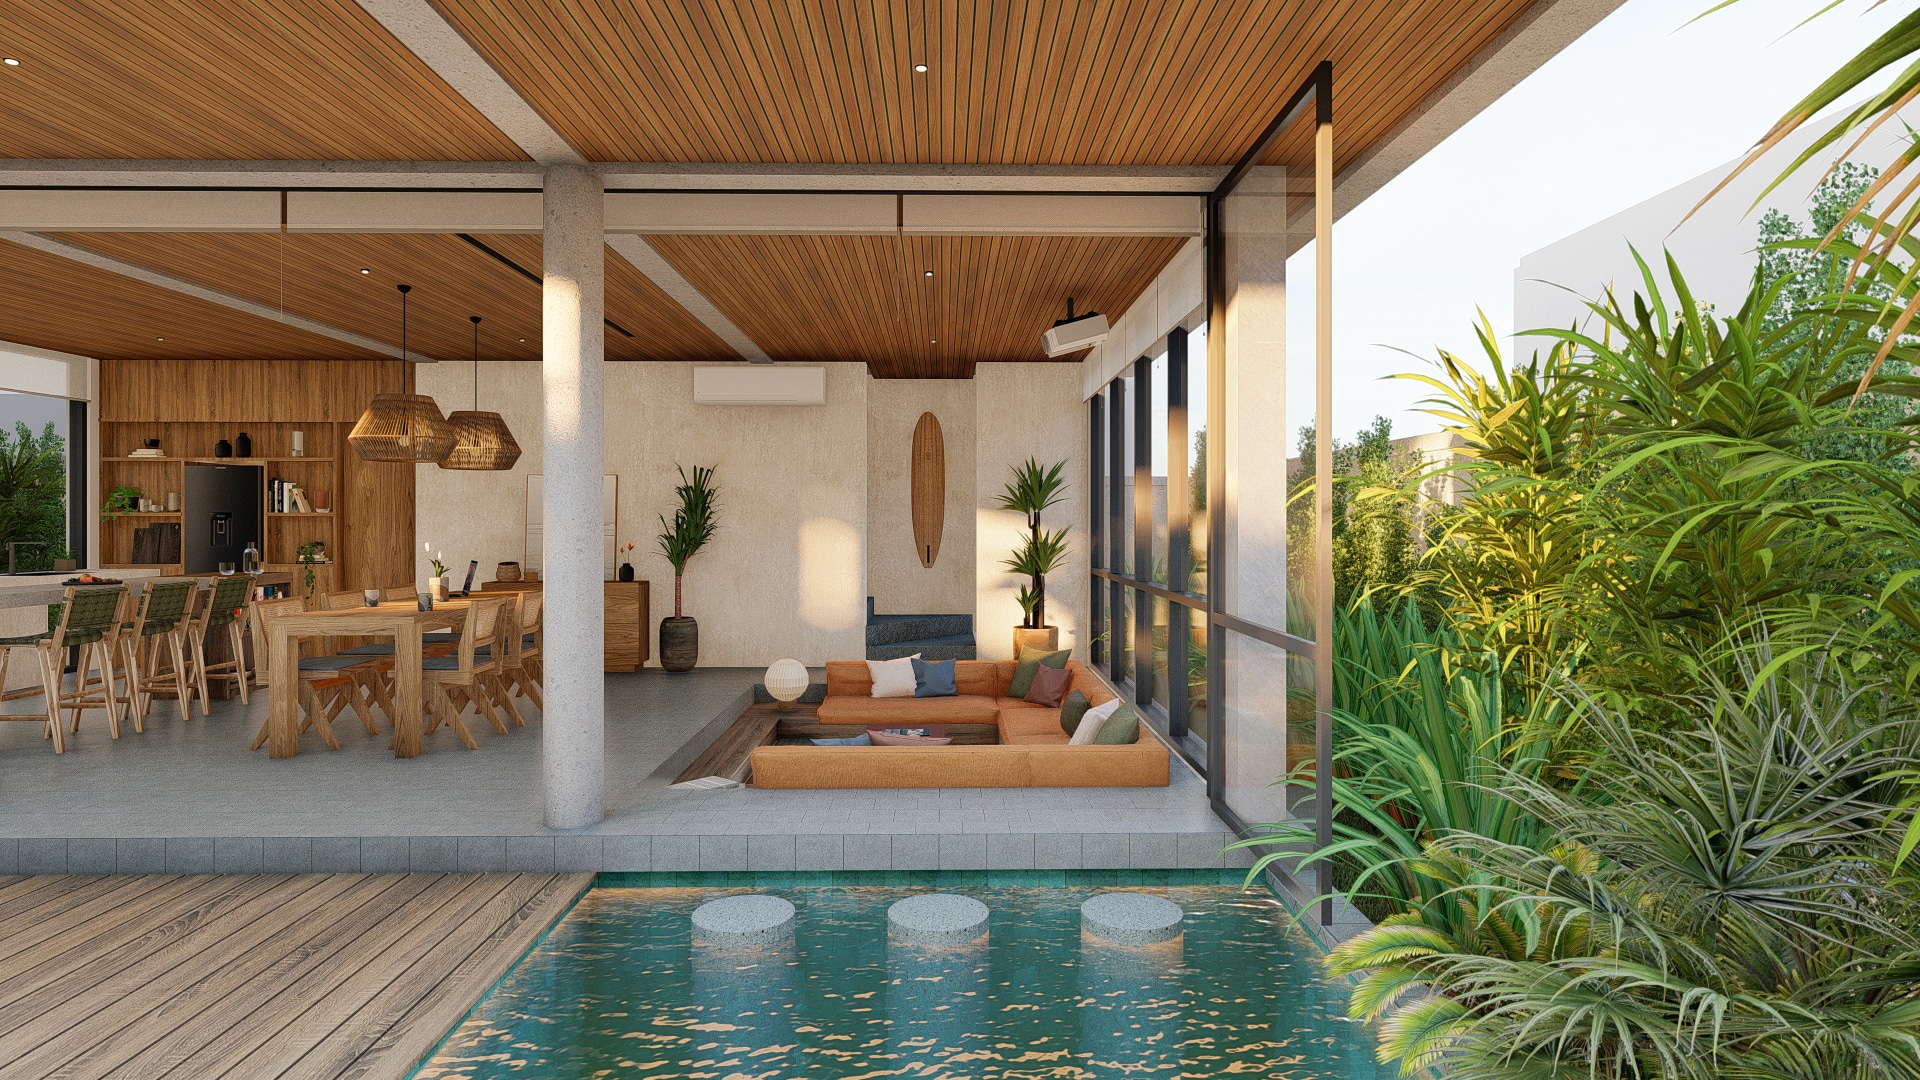 Design Assembly - MacDonald Villa - Bali Architect - Interior Design - Bali Villa - Wooden Facade - Living Room - Swimming Pool